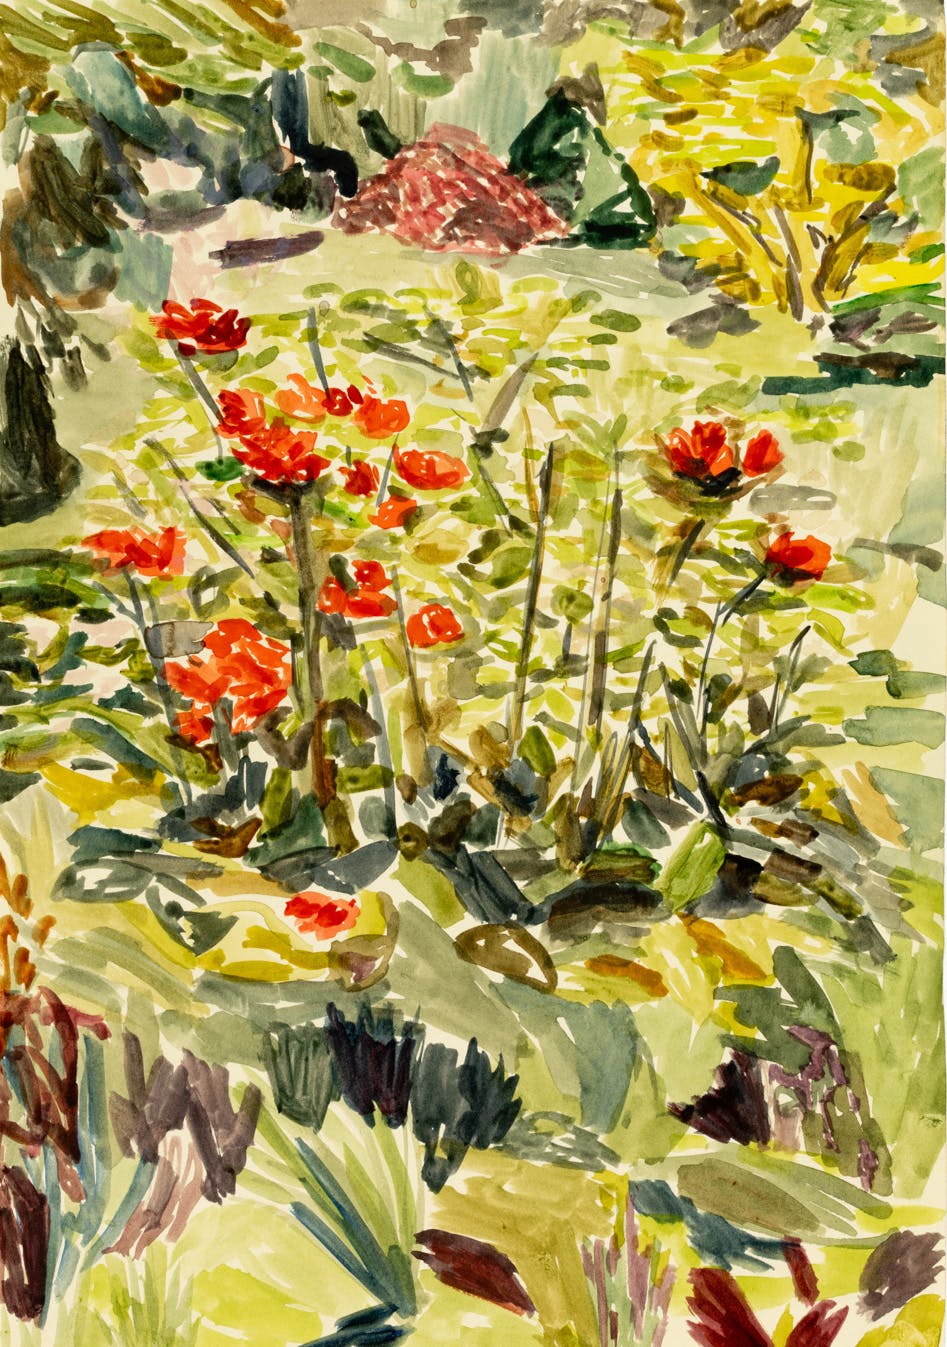 Cemetry Garden, 2019. Watercolour on paper, 21 x 29.5cm